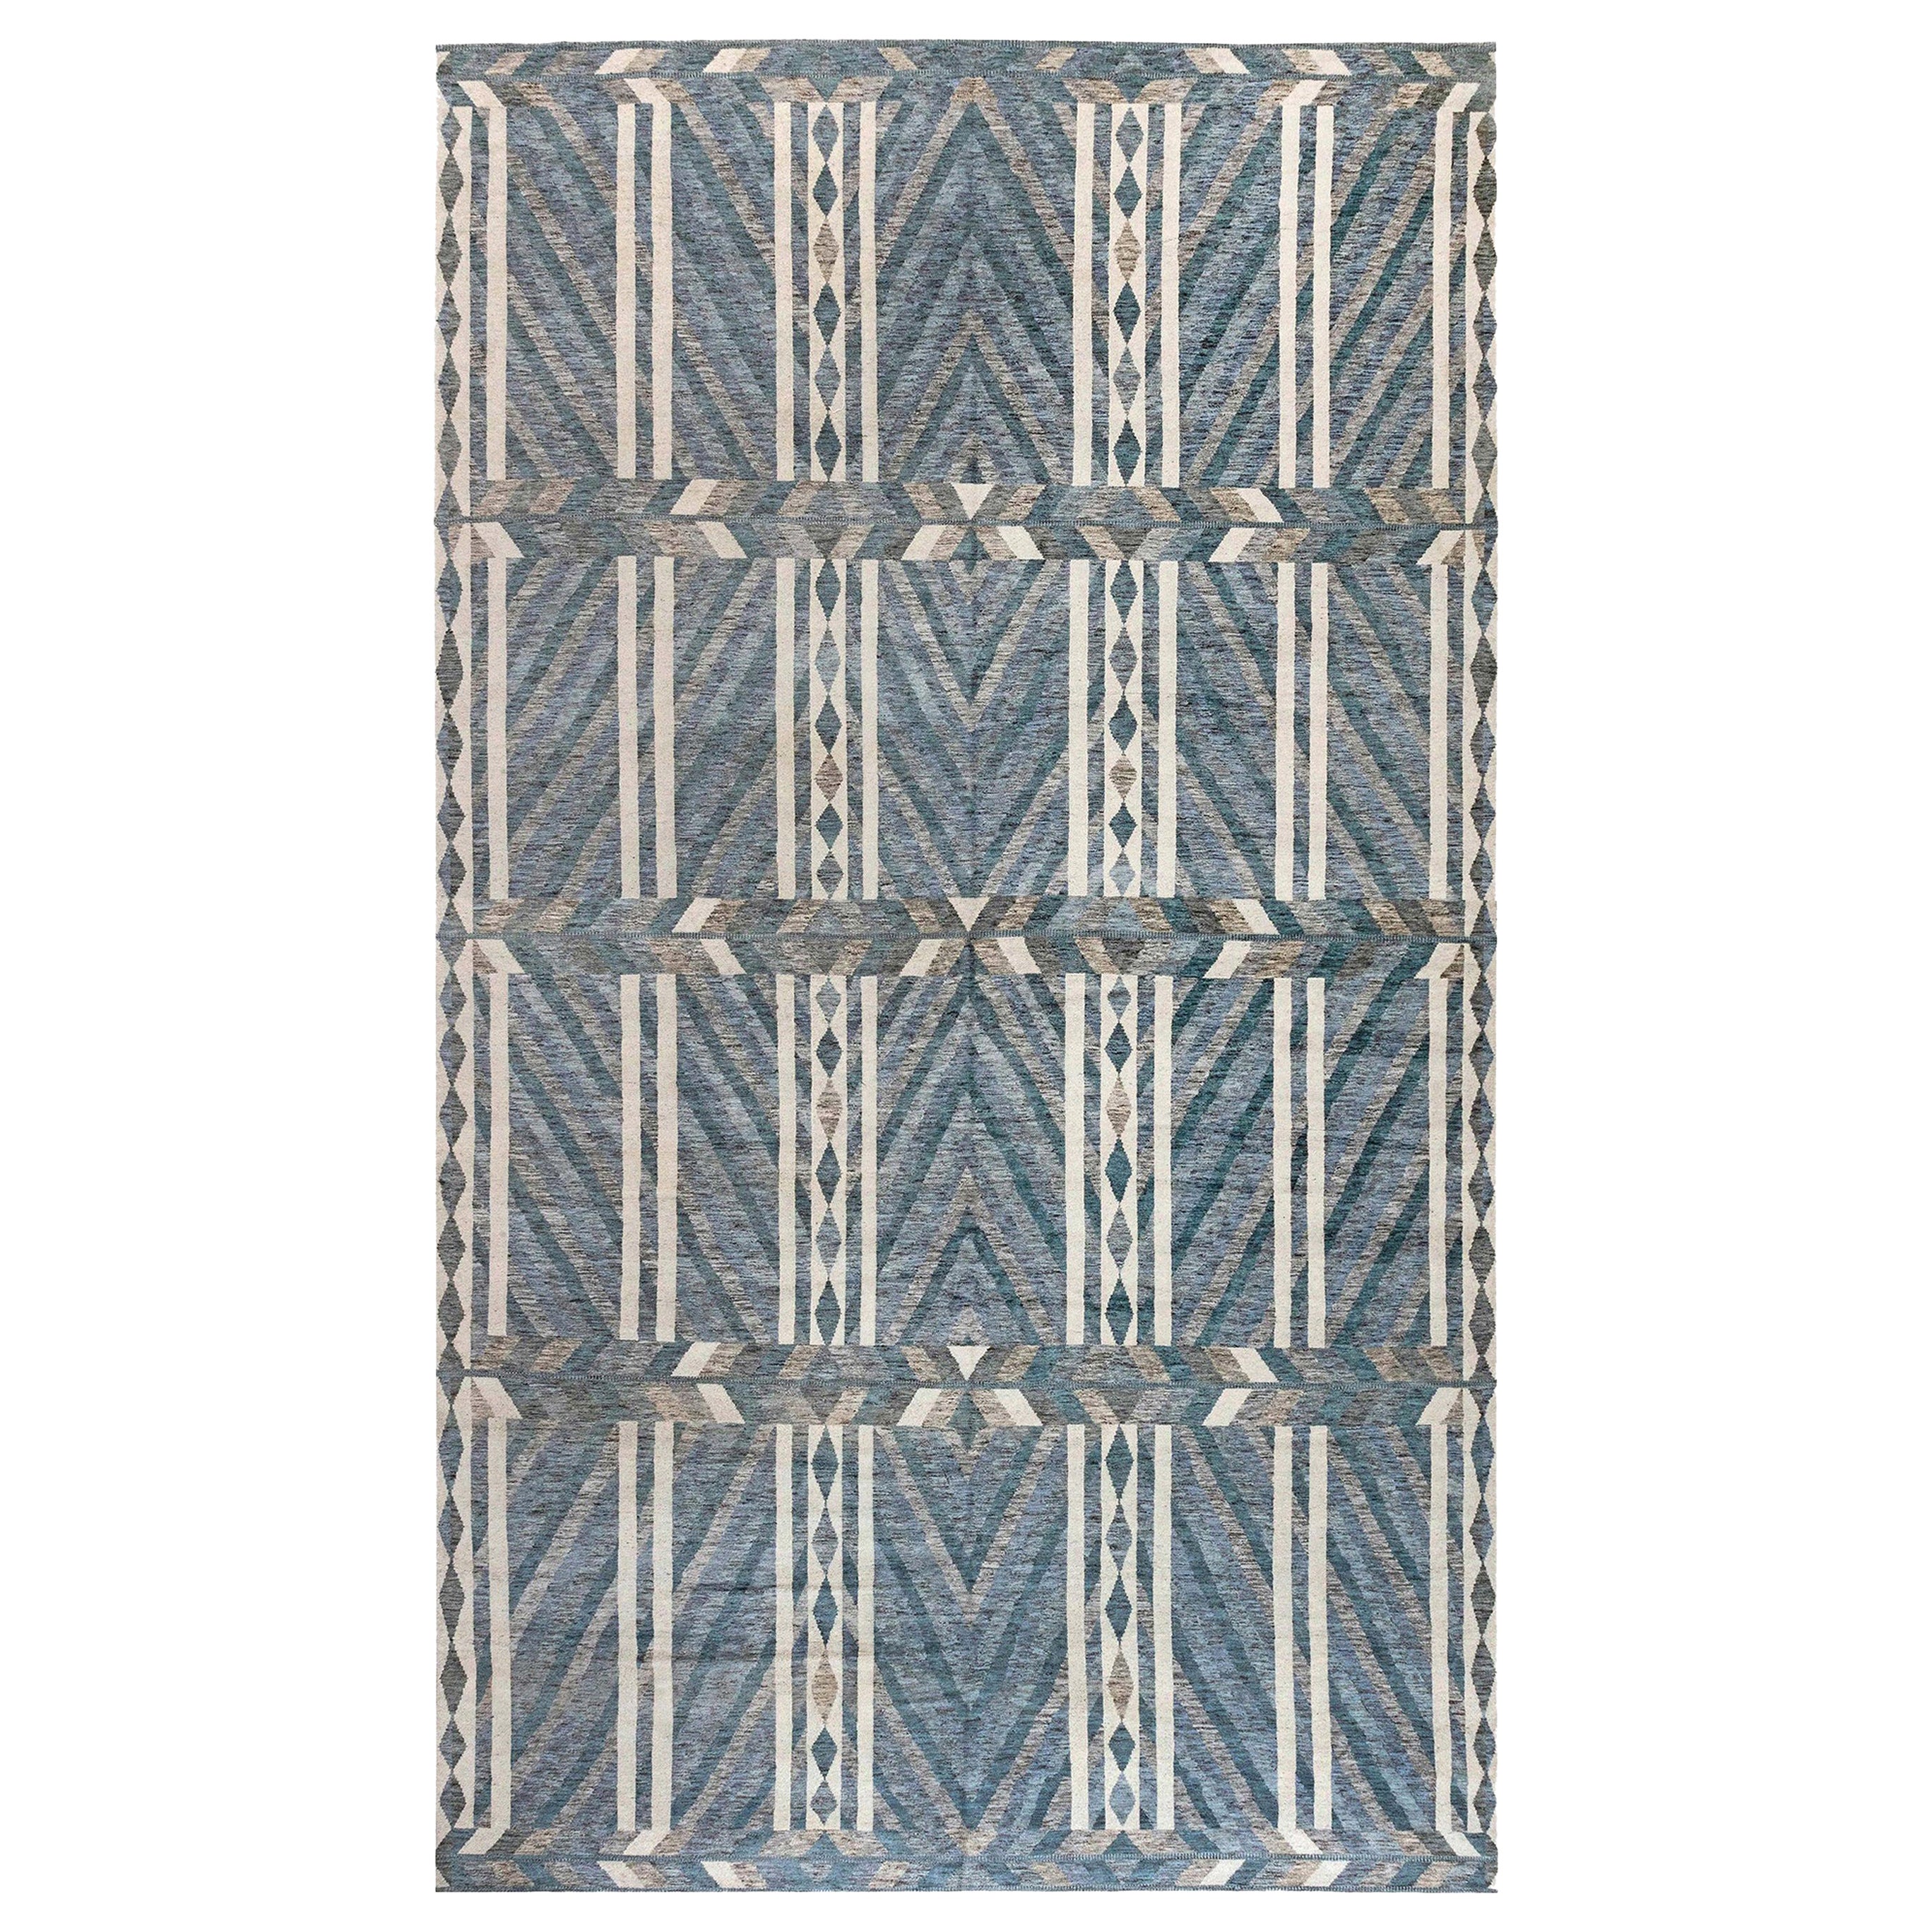 Oversized Geometric Swedish Style Blue Grey Handmade Rug by Doris Leslie Blau